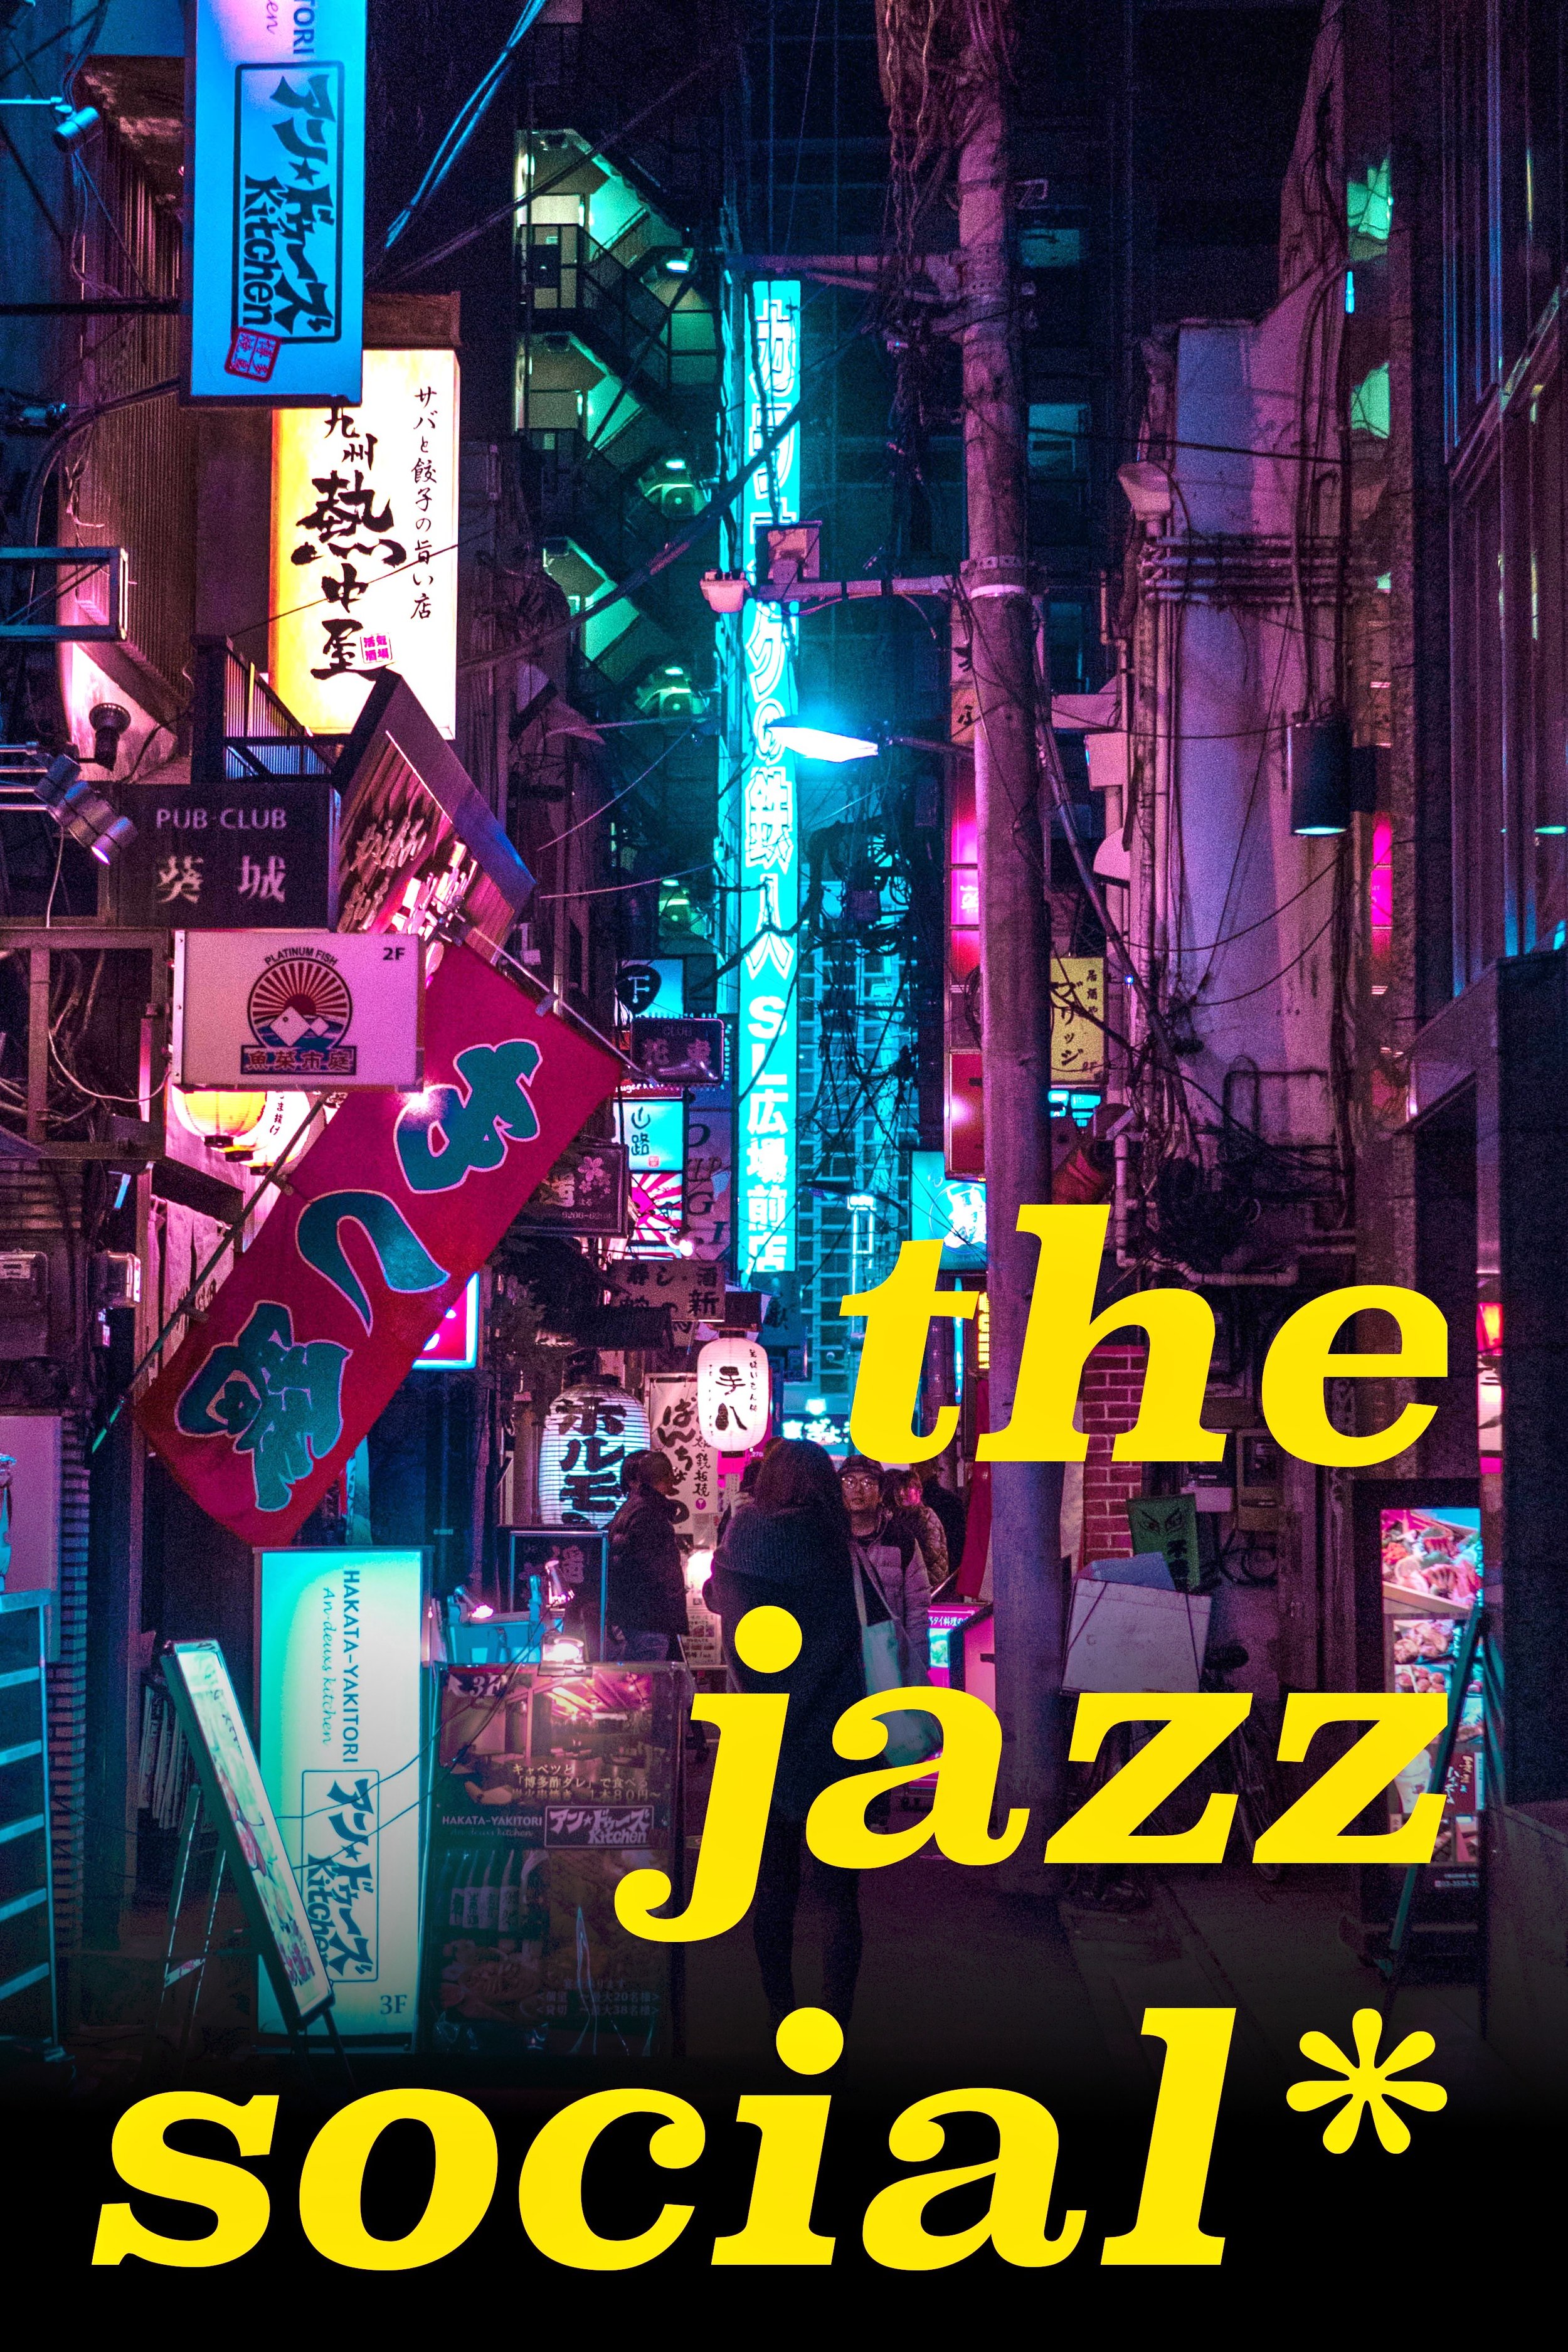 The Jazz Social Image NEW.jpg